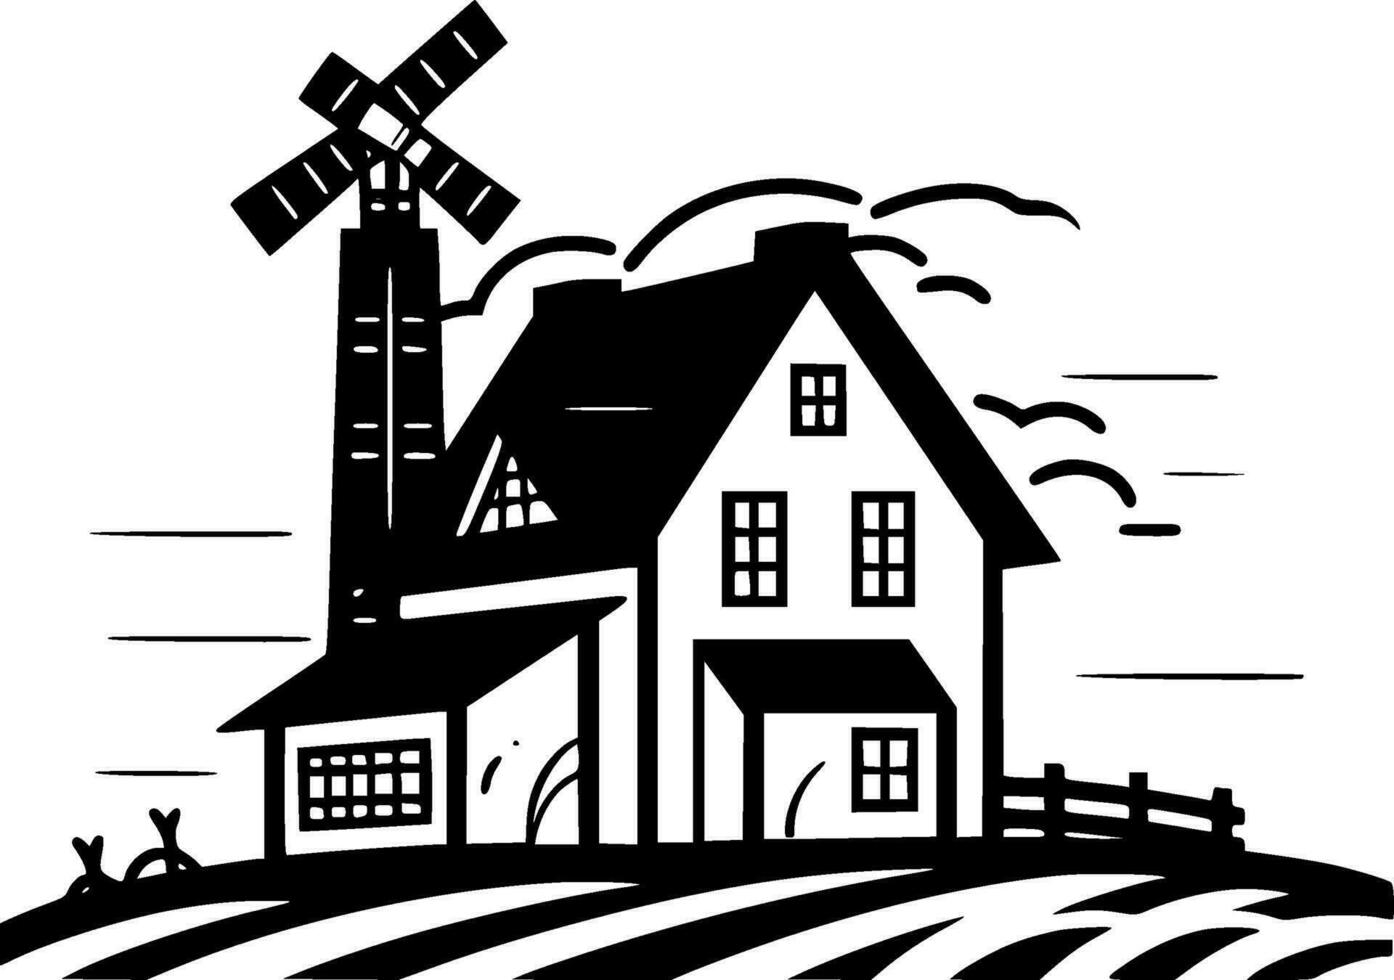 casa de fazenda - minimalista e plano logotipo - vetor ilustração